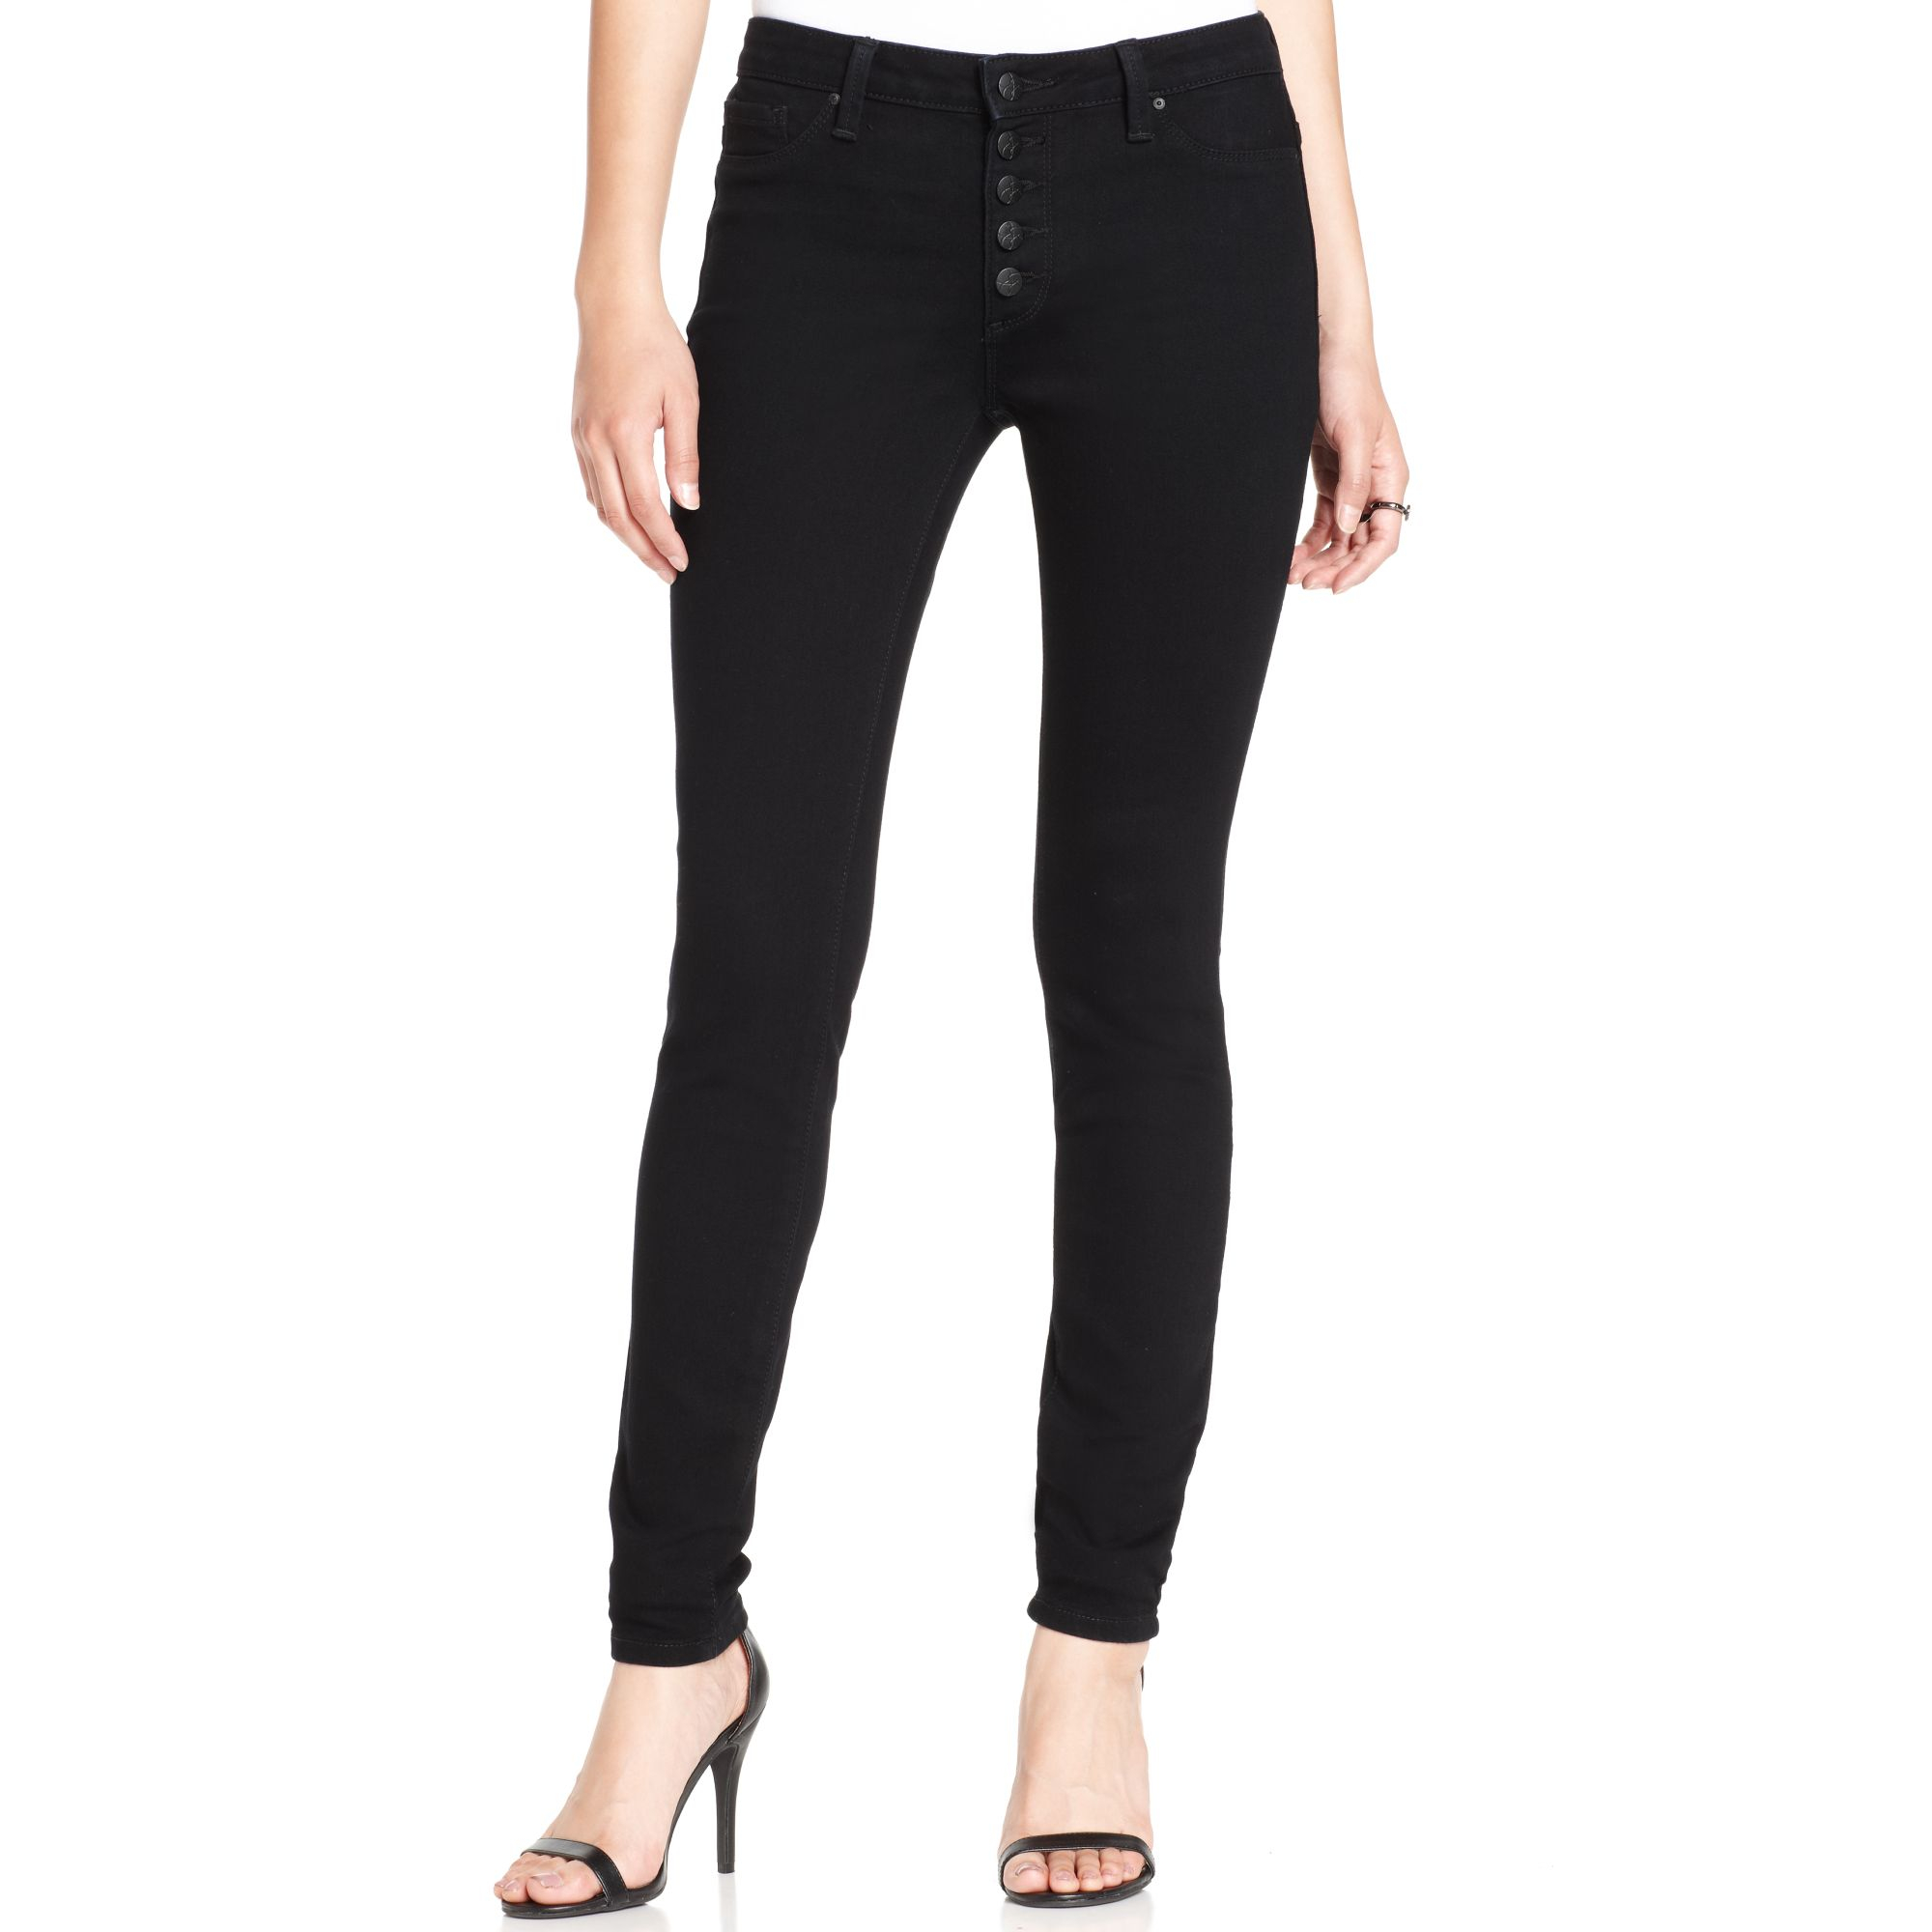 Lyst - Jessica Simpson Vintage Skinny Jeans in Black